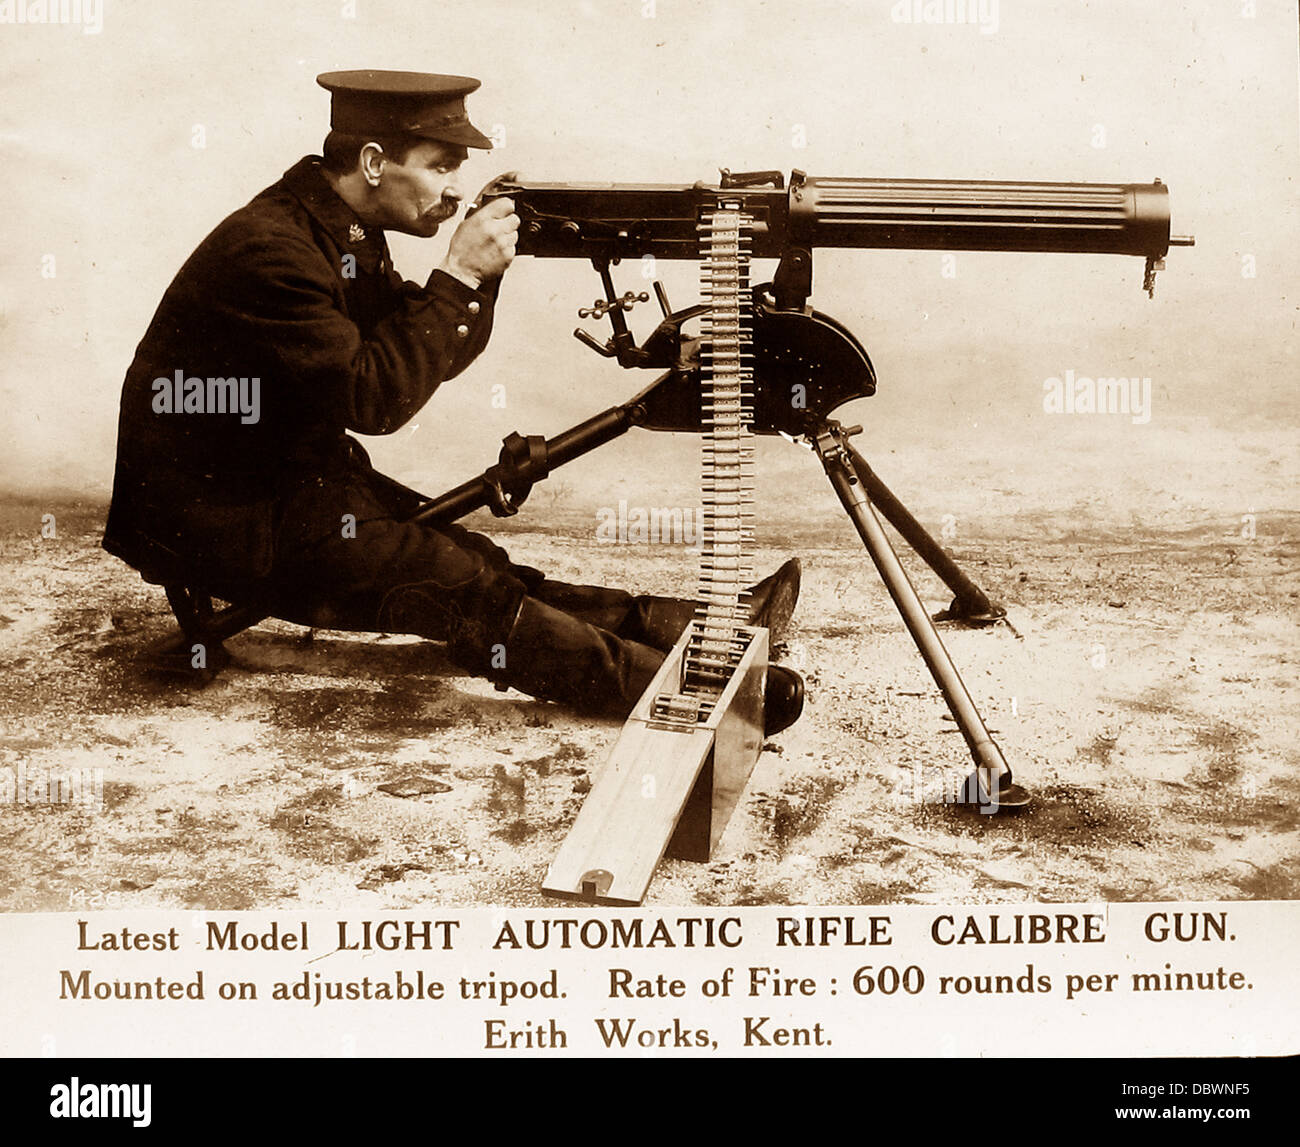 Ww1 gun hi-res stock photography and images - Alamy